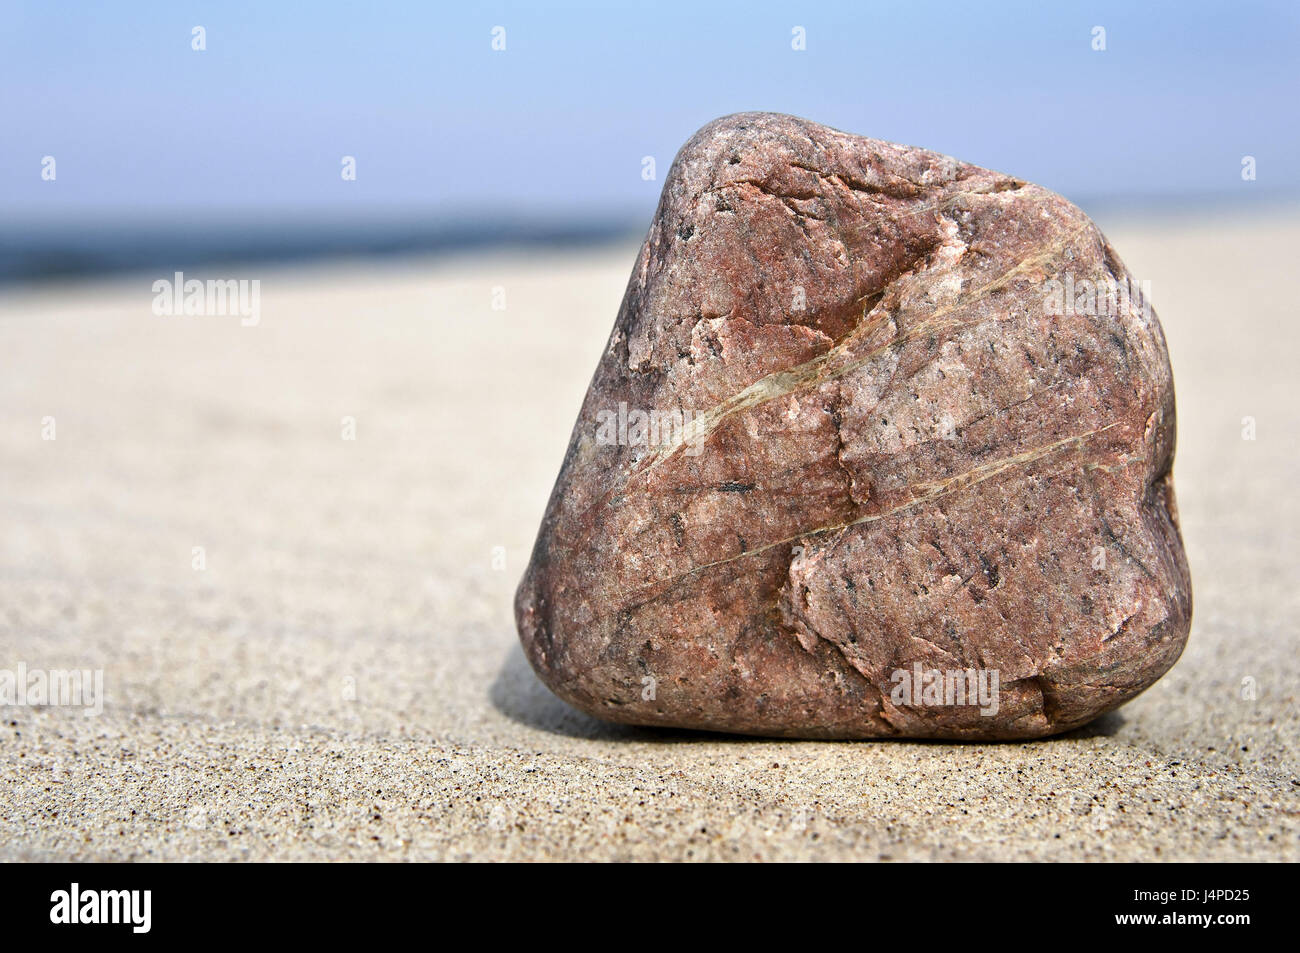 Sandy beach, stone, reddish, Stock Photo